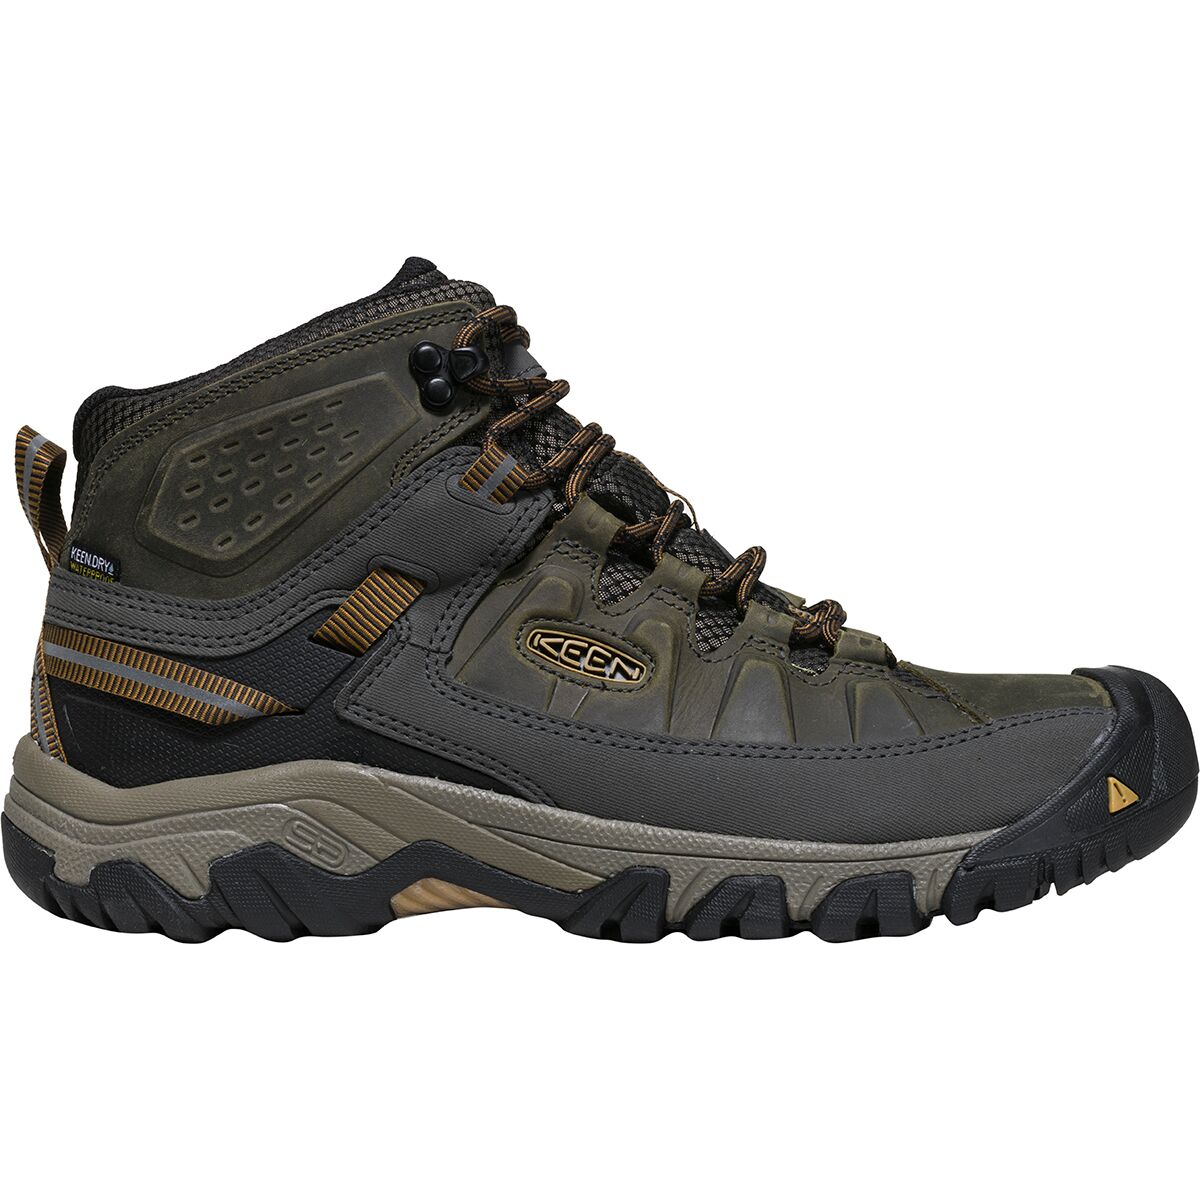 KEEN Targhee III Mid Leather Waterproof Hiking Boot - Men's